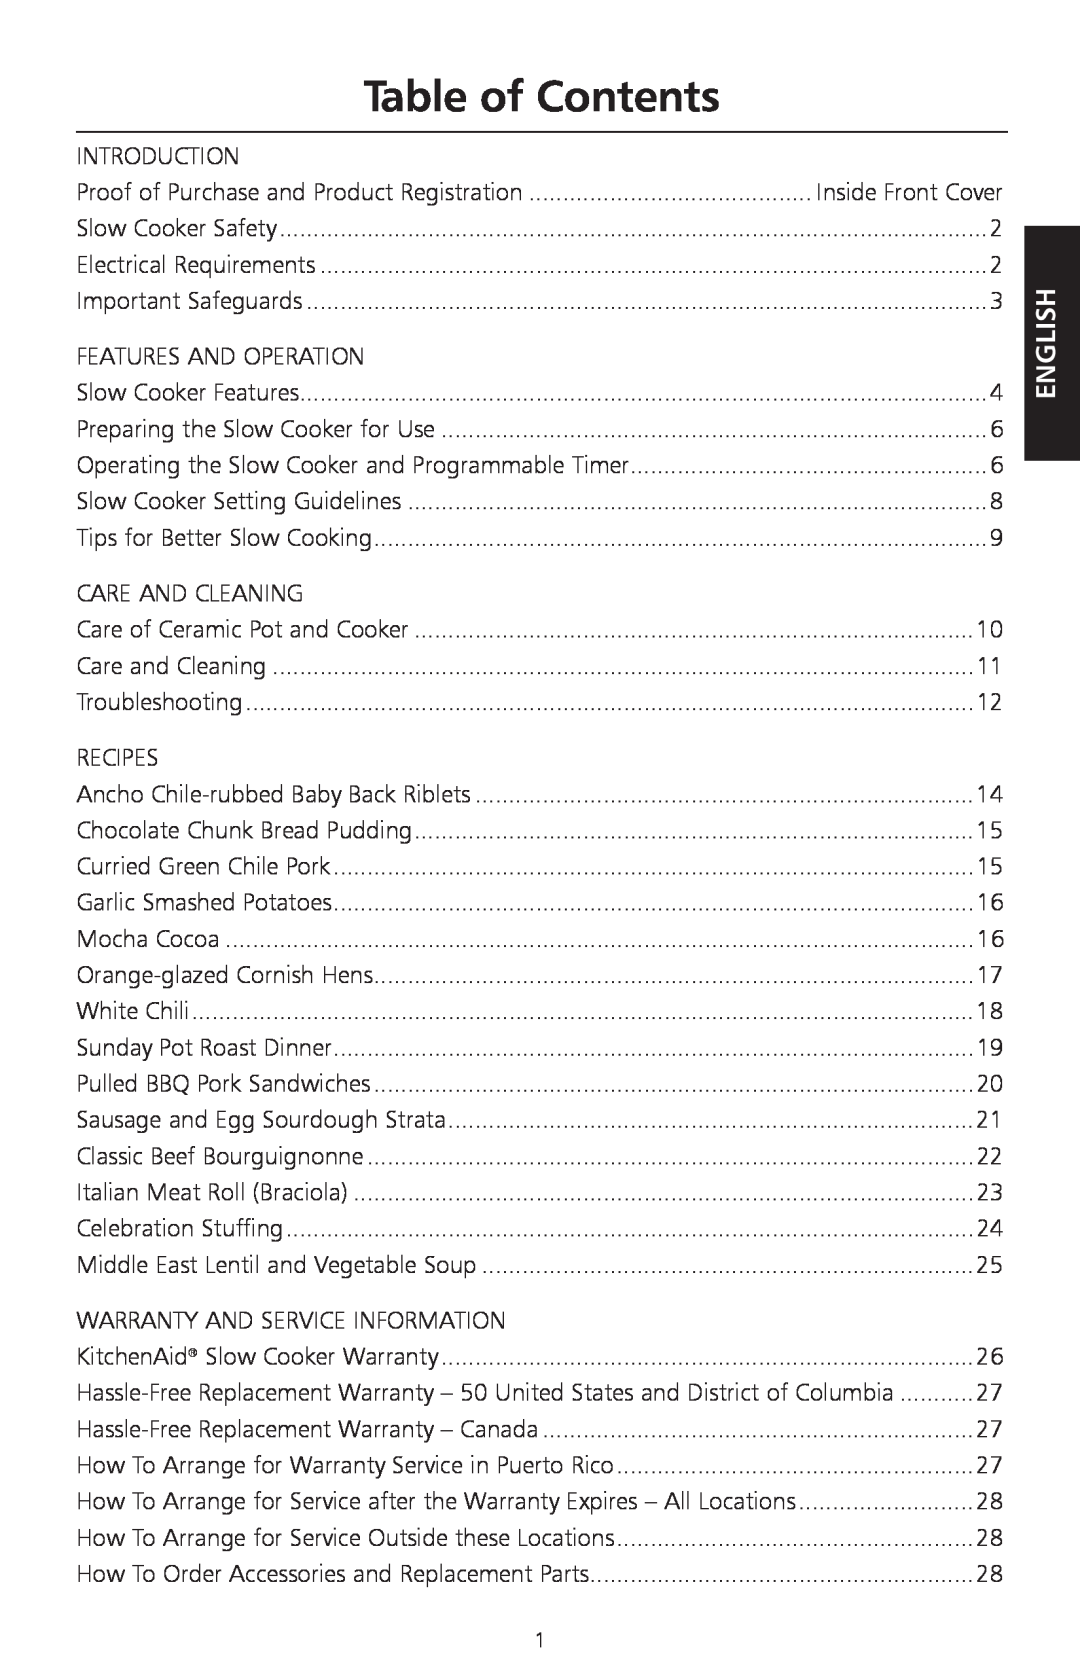 KitchenAid KSC700 manual Table of Contents, English 